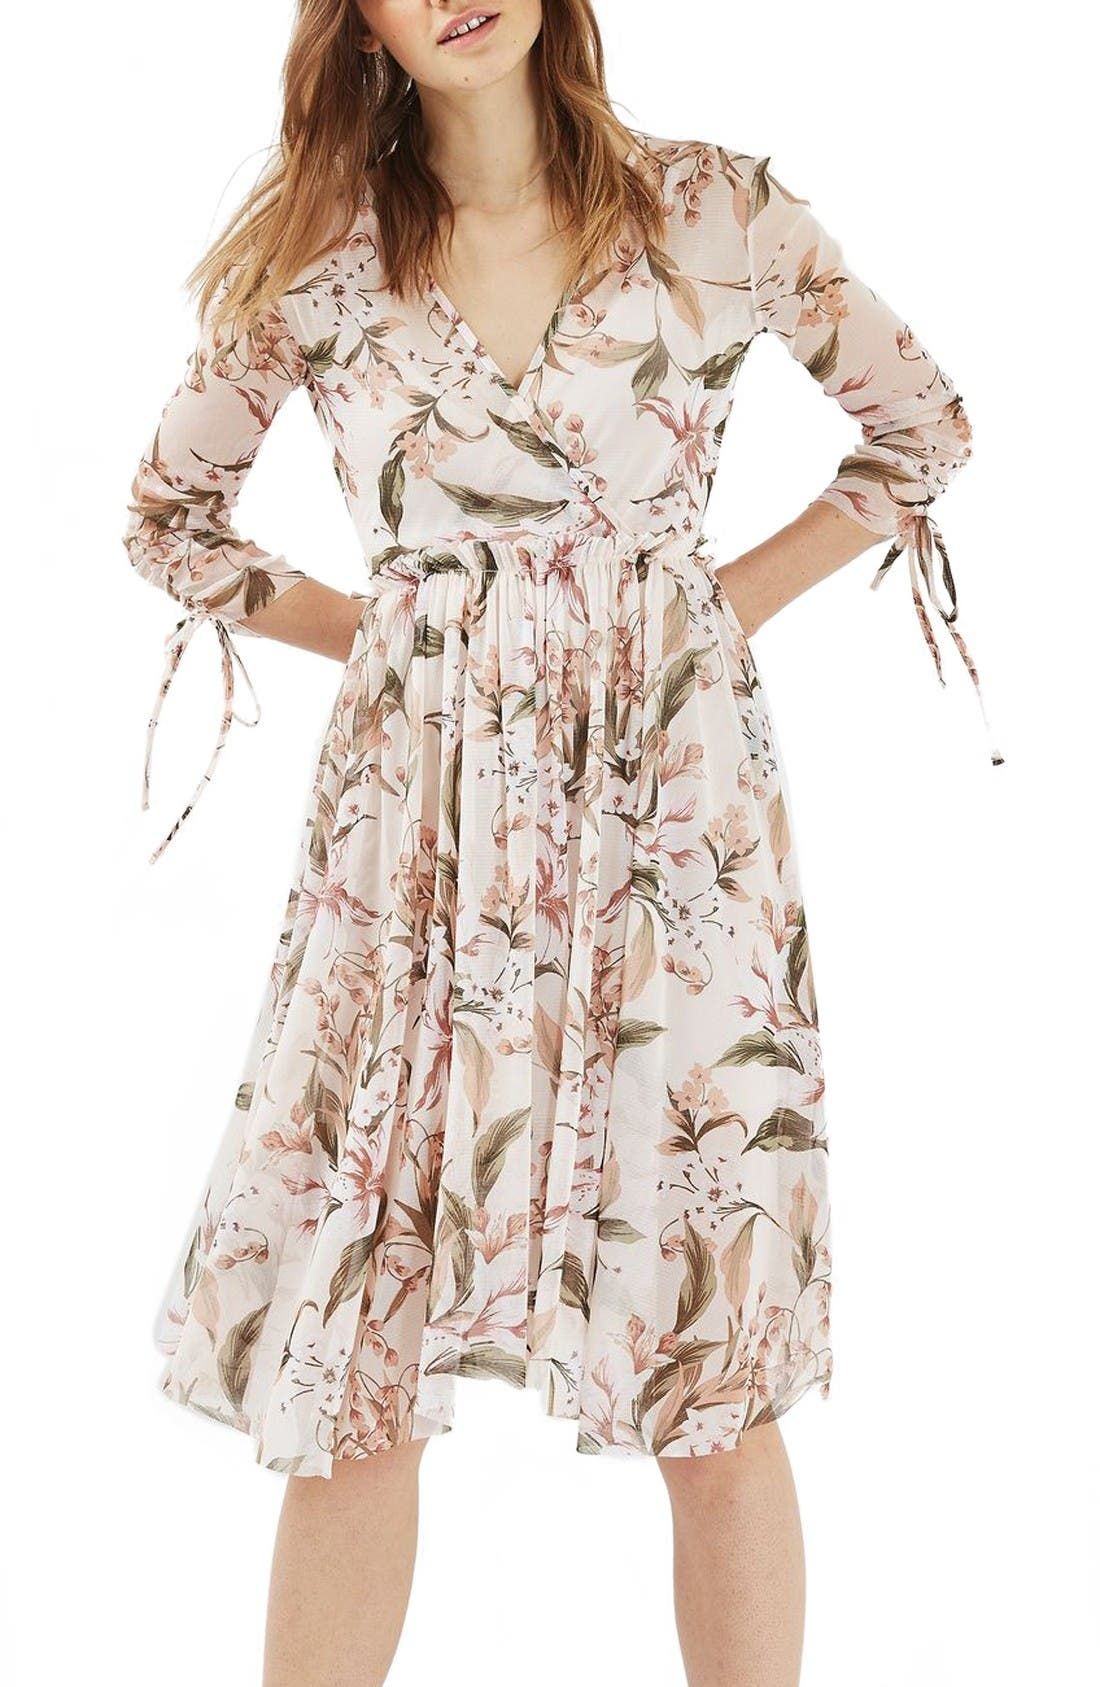 Lily Floral Mesh Dress | Nordstrom